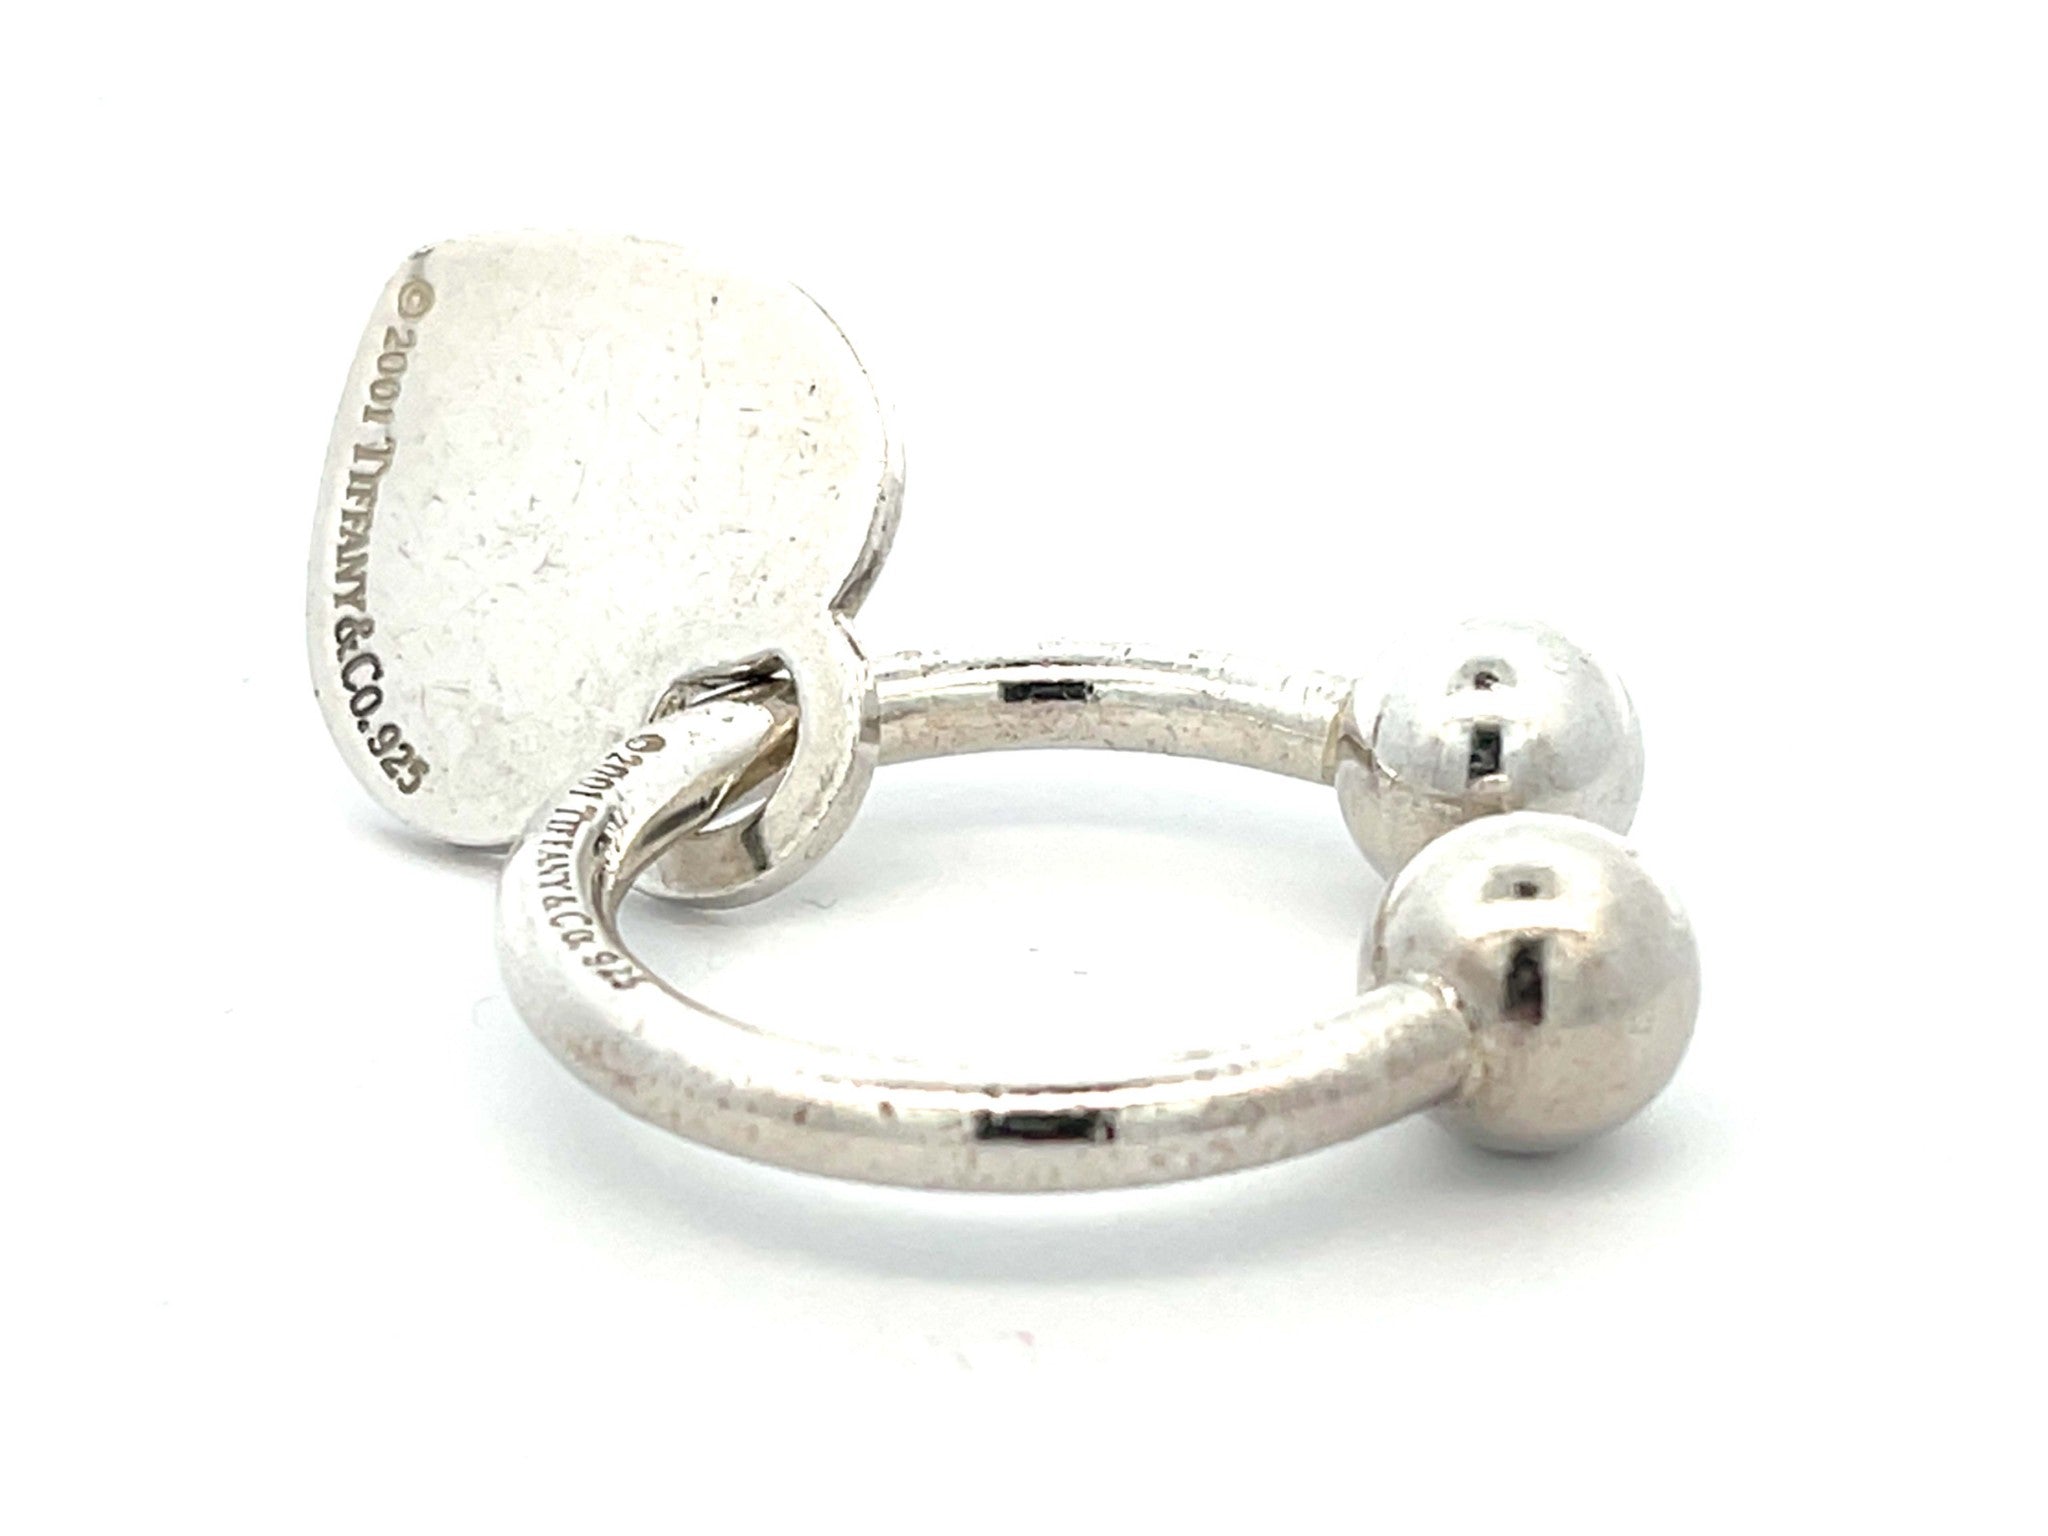 2001 Tiffany & Co. Key Ring in Sterling Silver